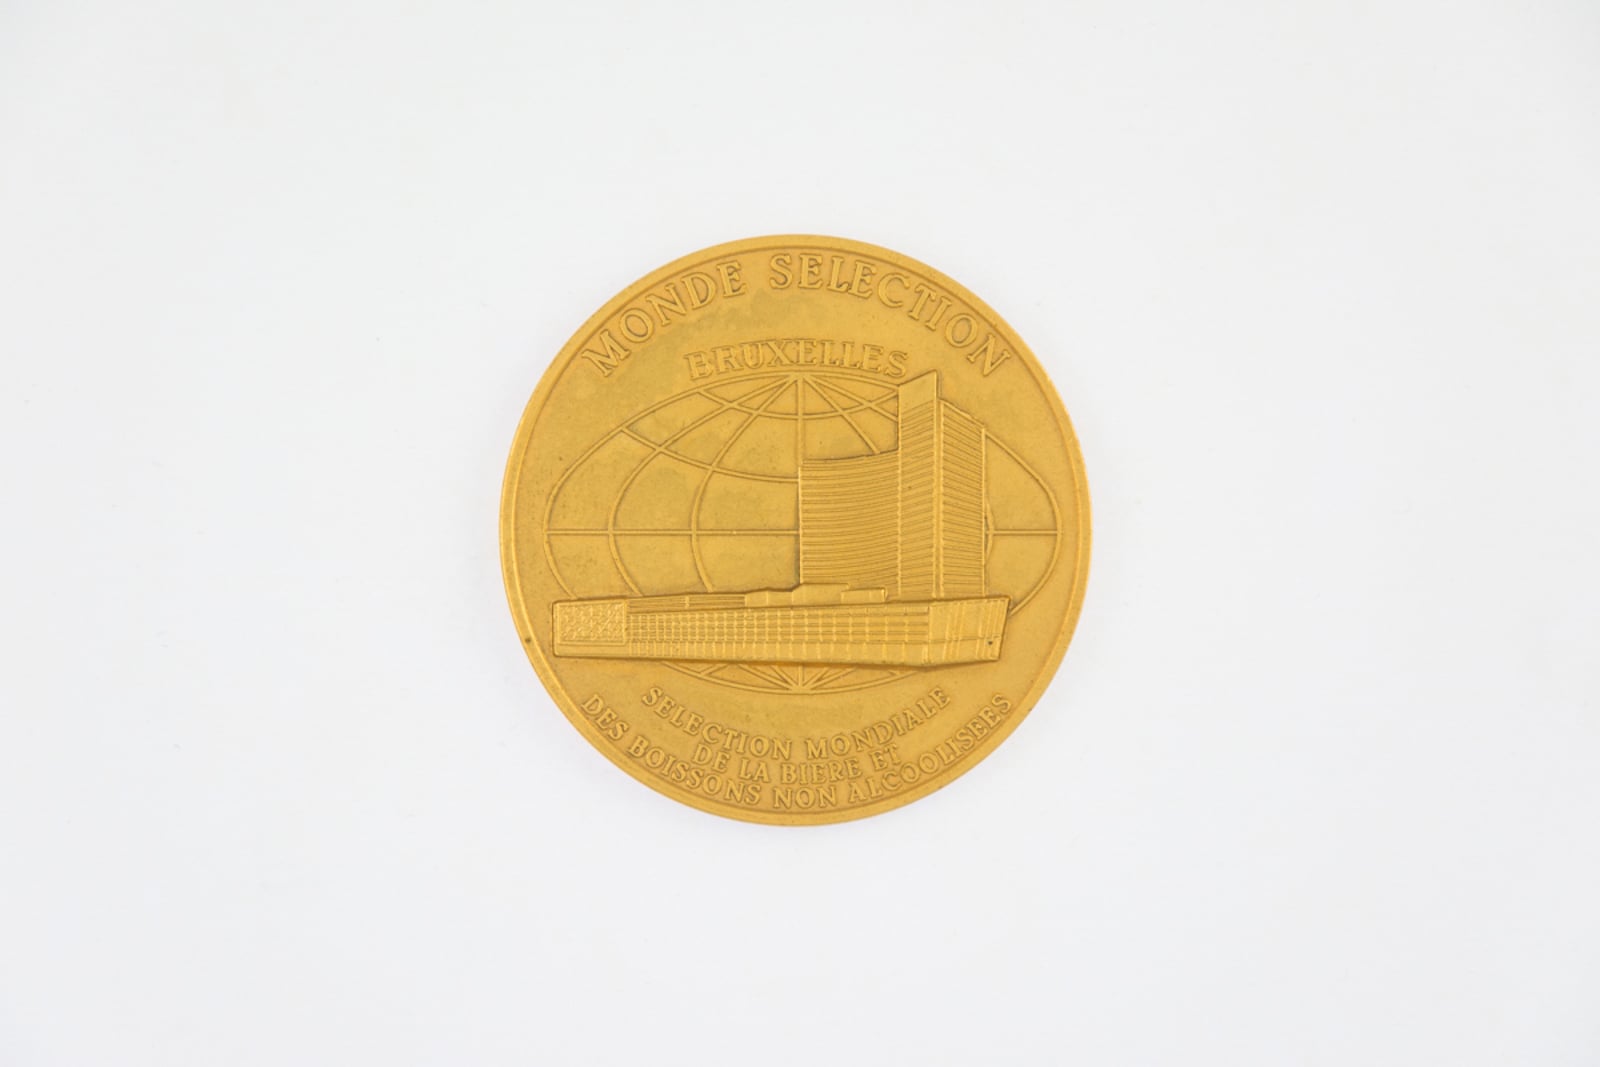 Monde Selection Bruxelles Medaille d'Or 1986